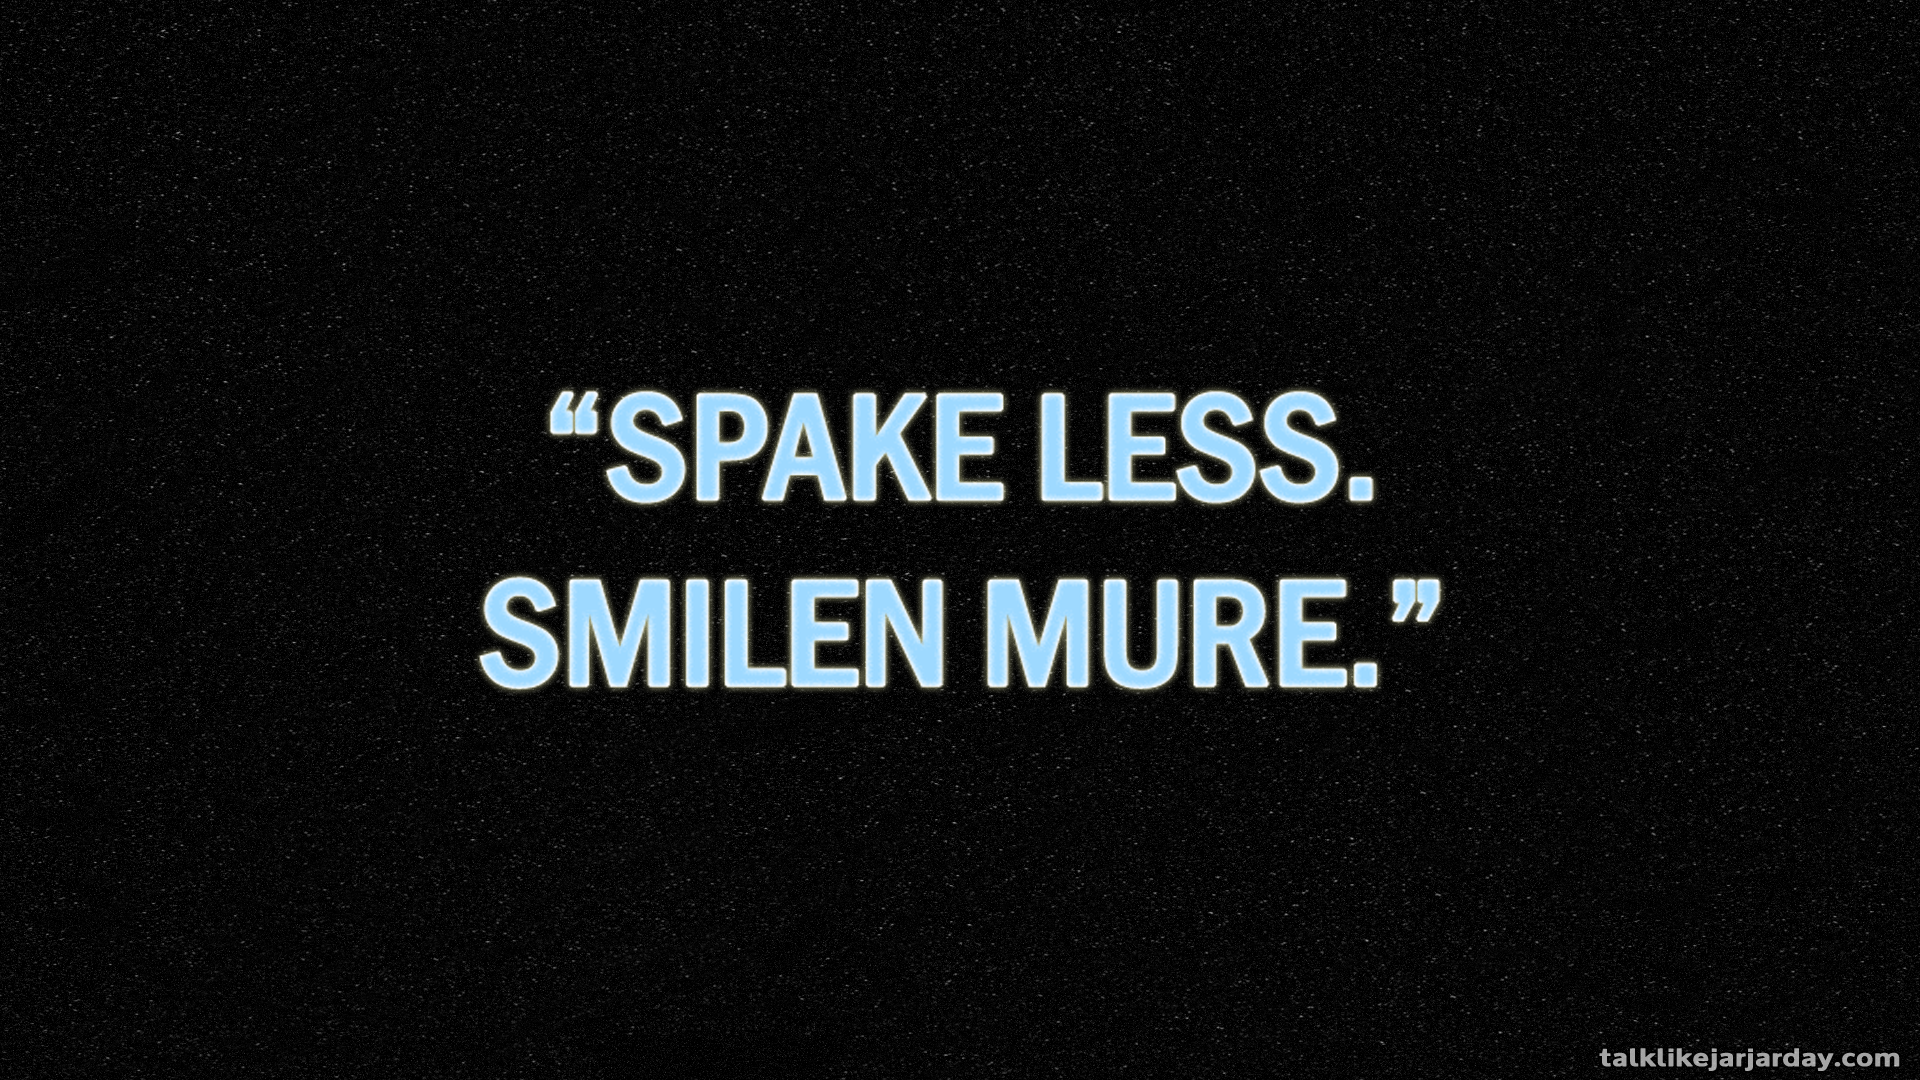 Spake less. Smilen mure.